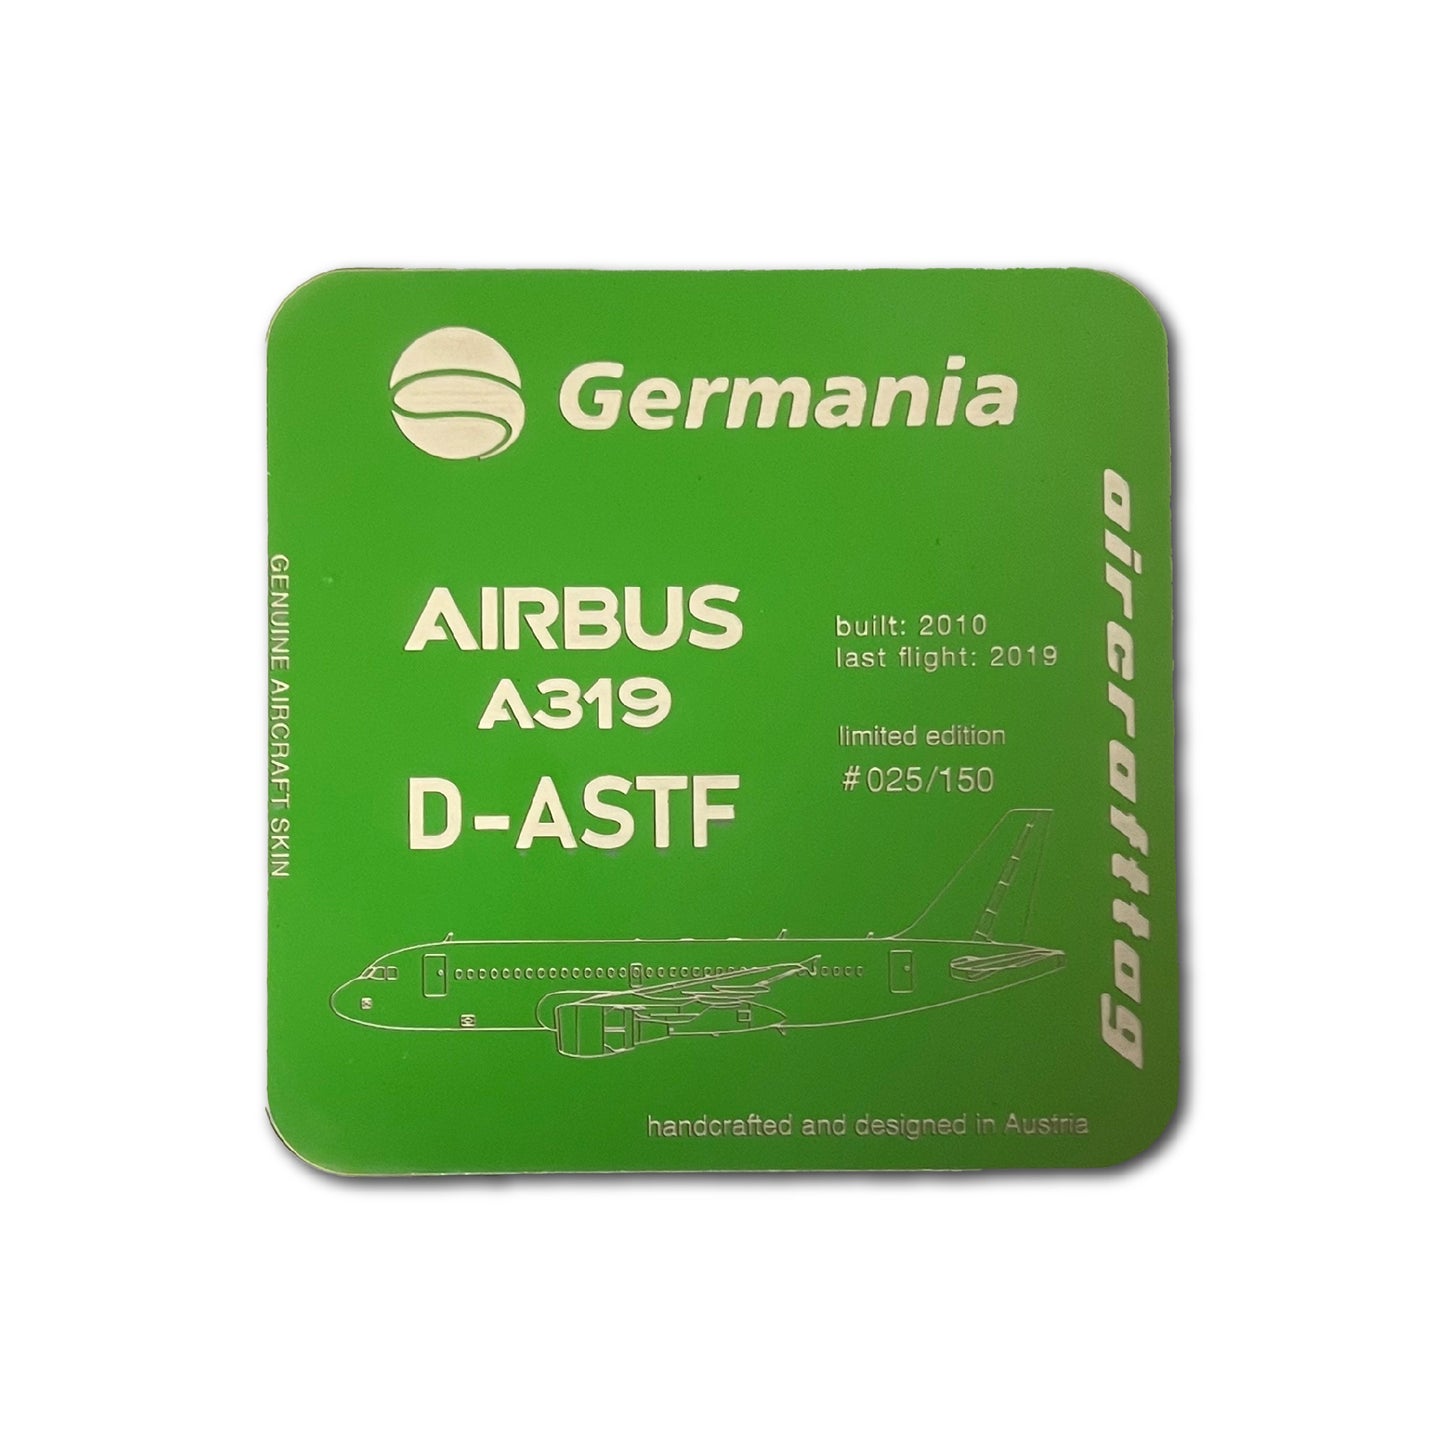 Coaster Airbus A319 - Germania - D-ASTF